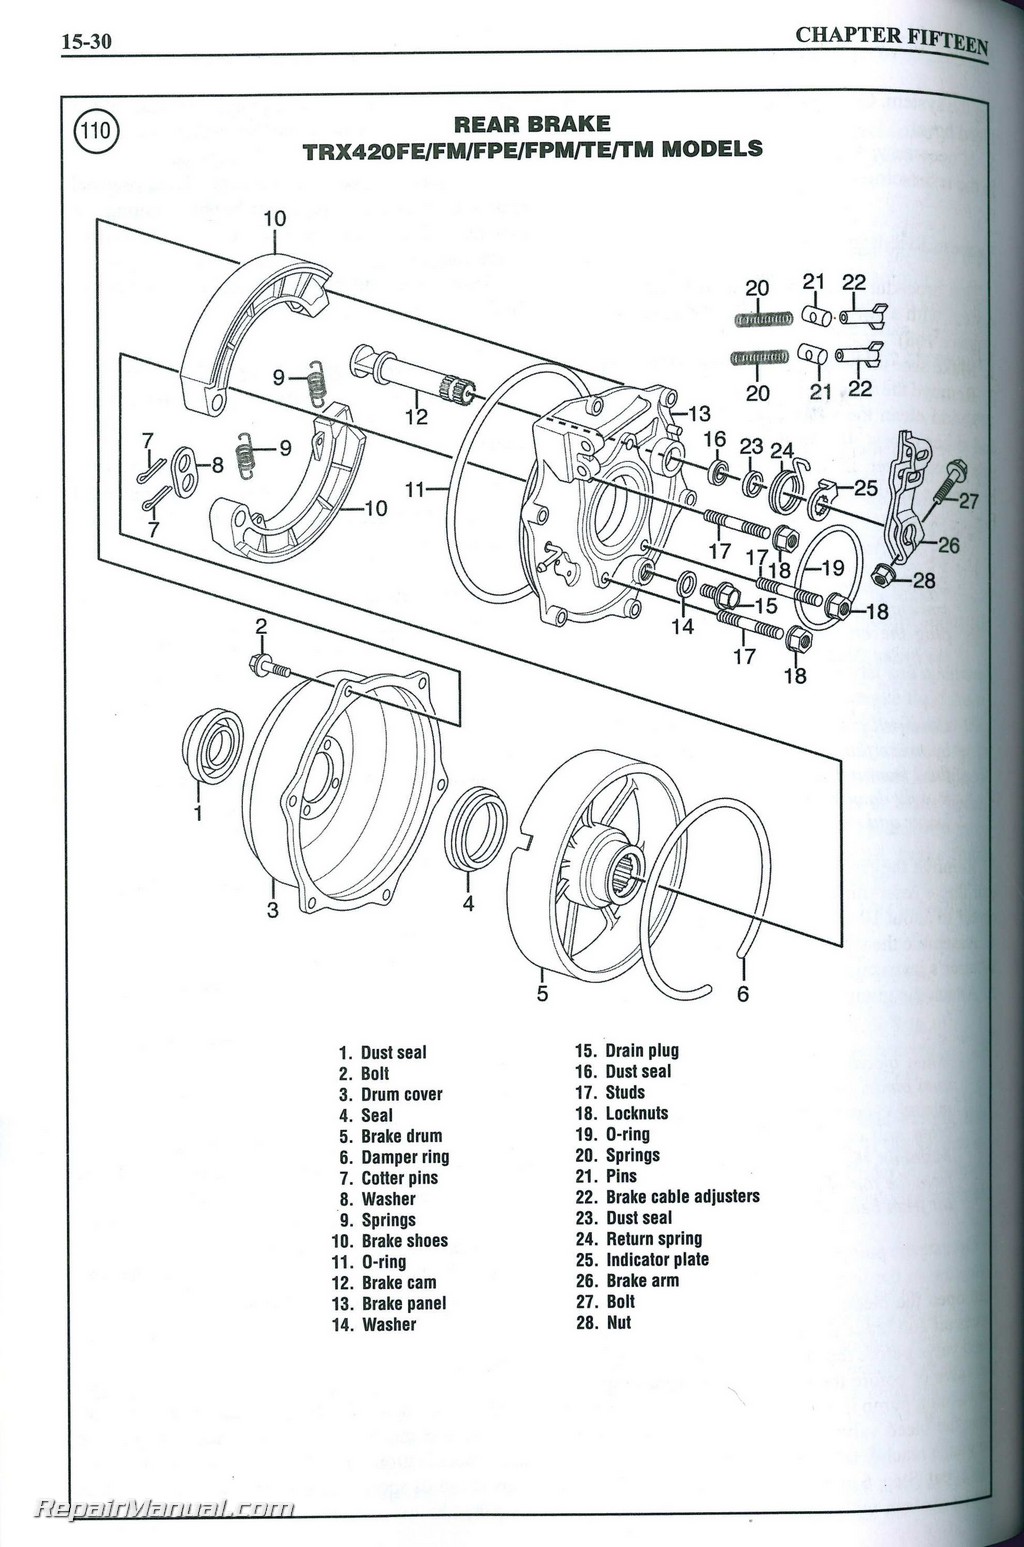 2002 Honda rancher owners manual pdf #7